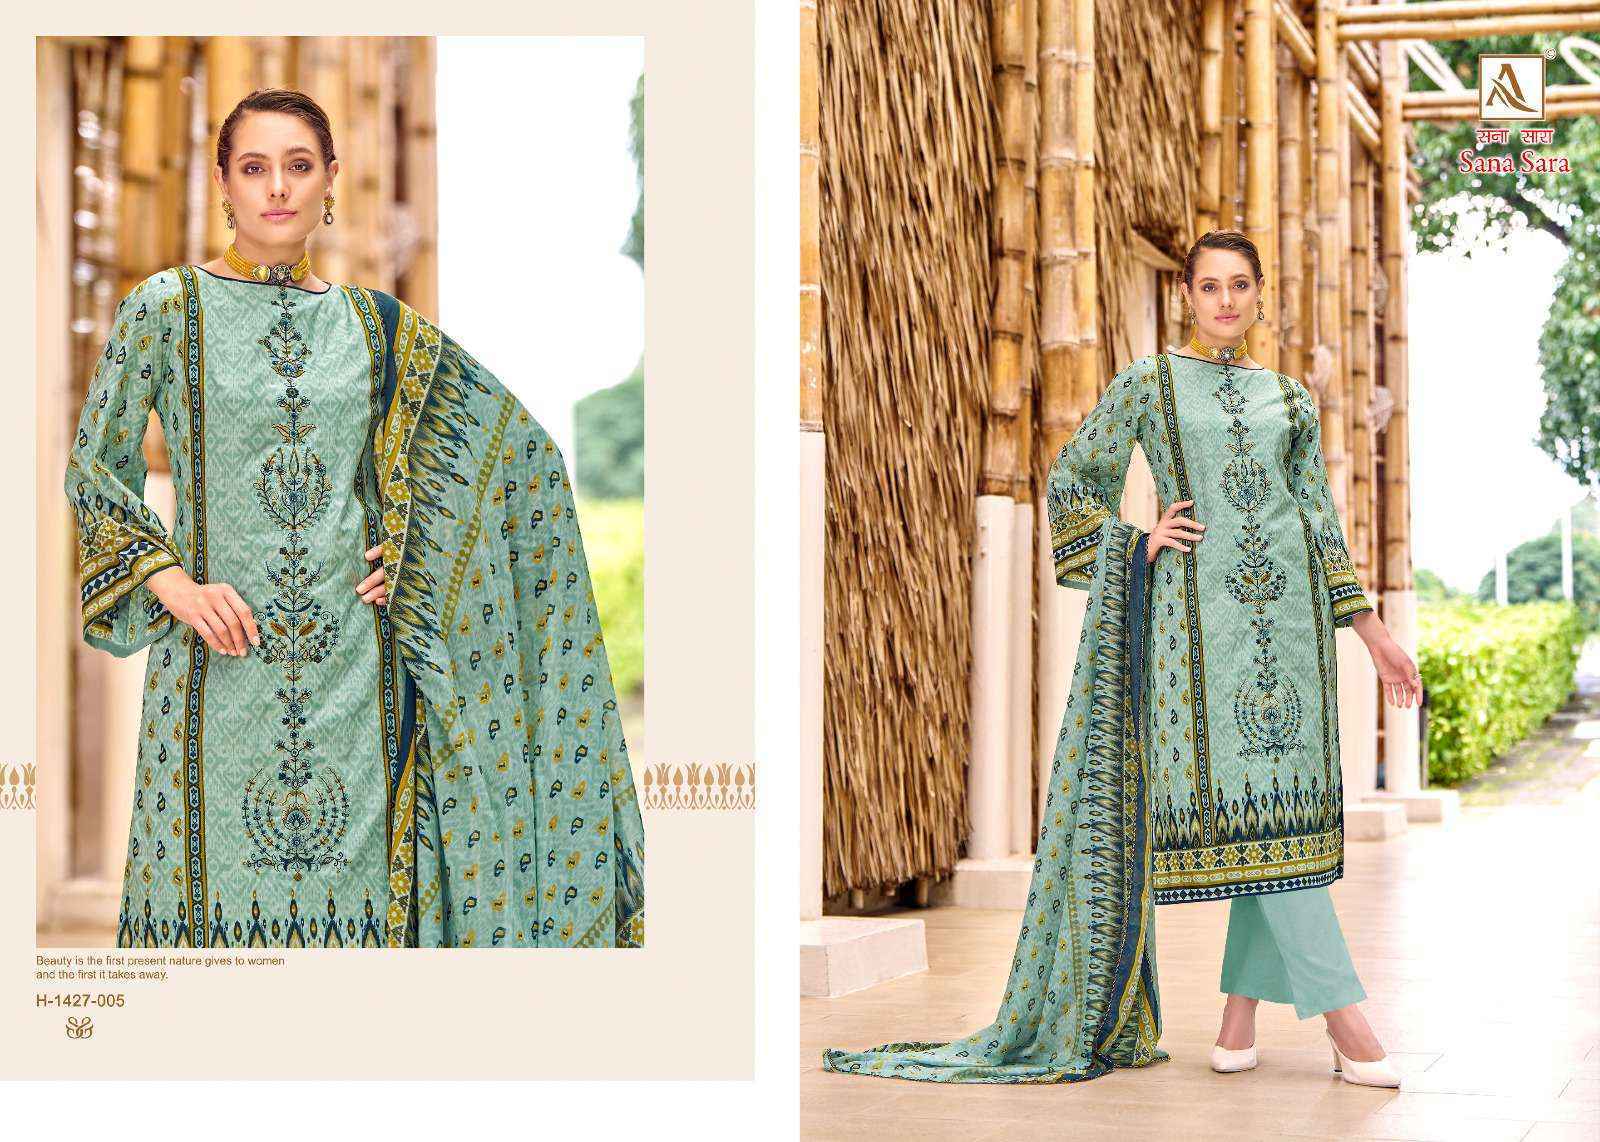 Alok Sana Sara Cambric Cotton Dress Material Wholesale Price